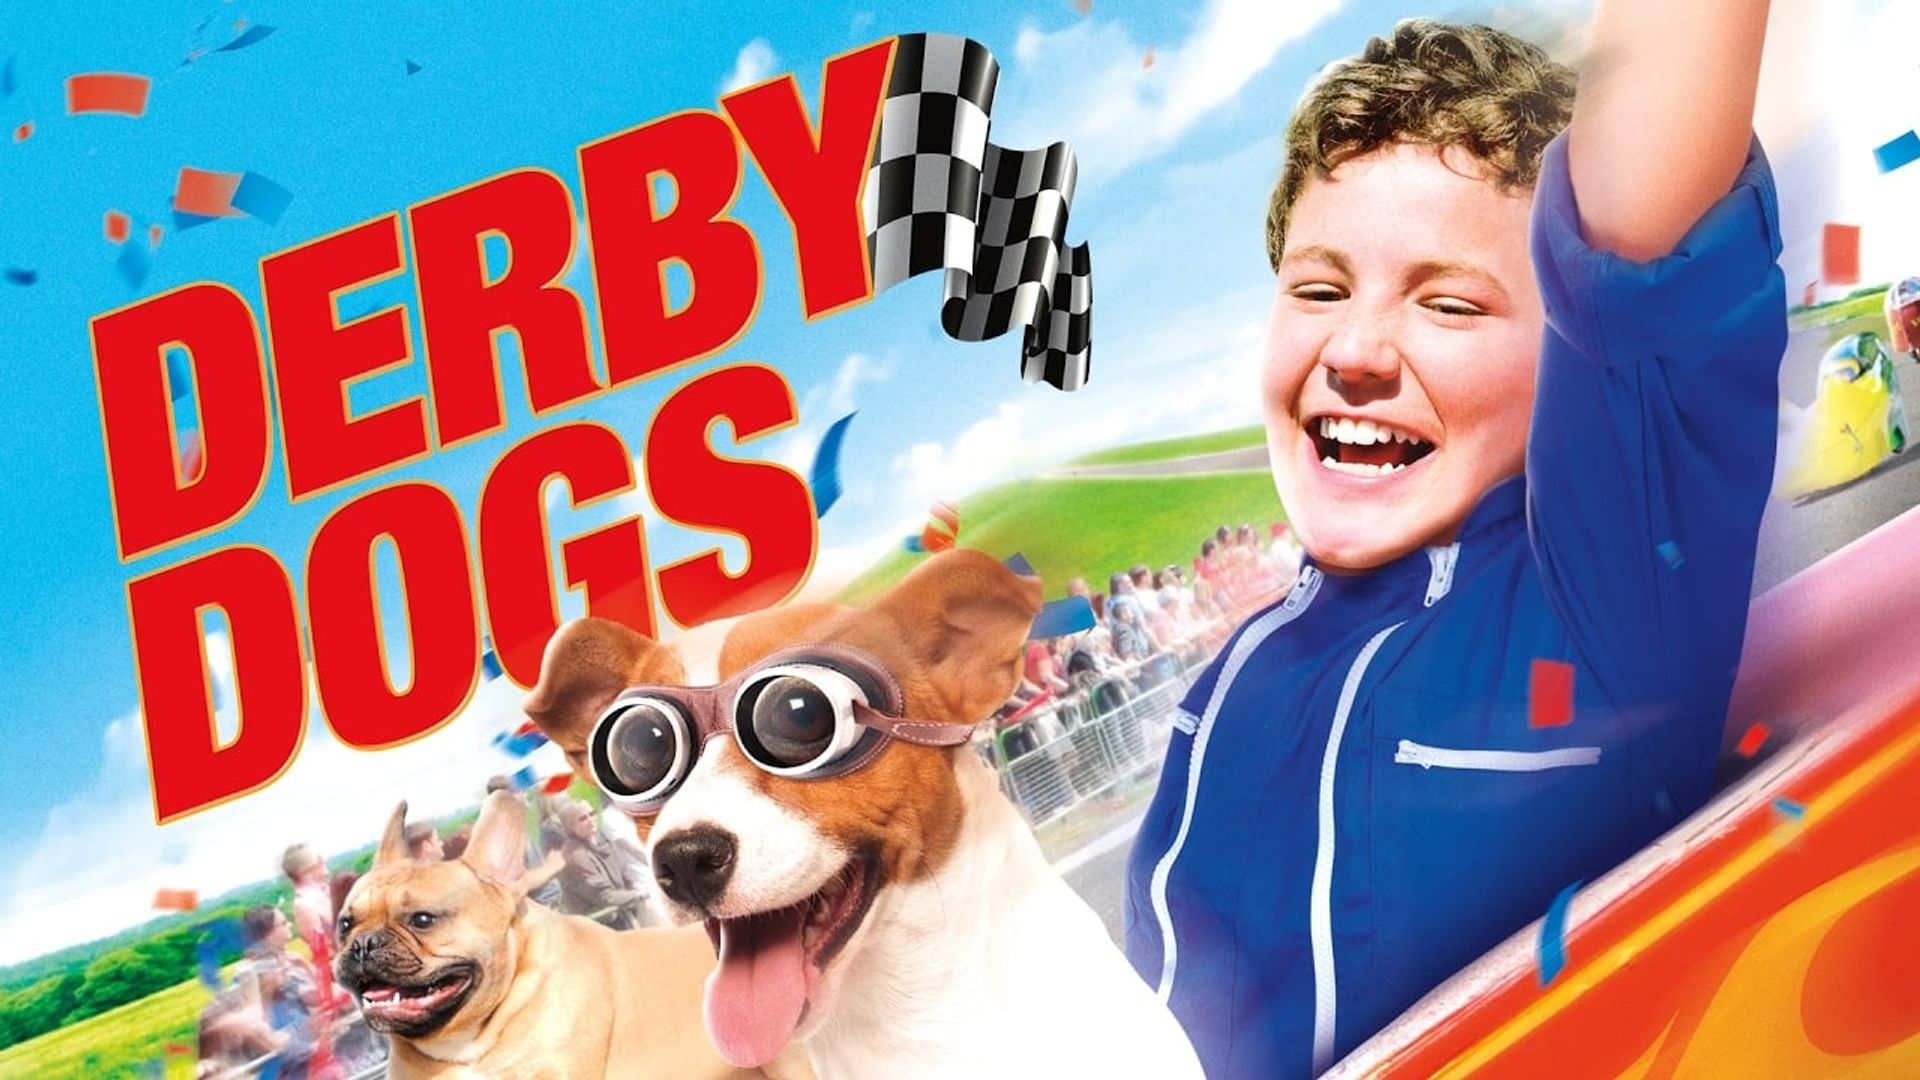 Derby Dogs background